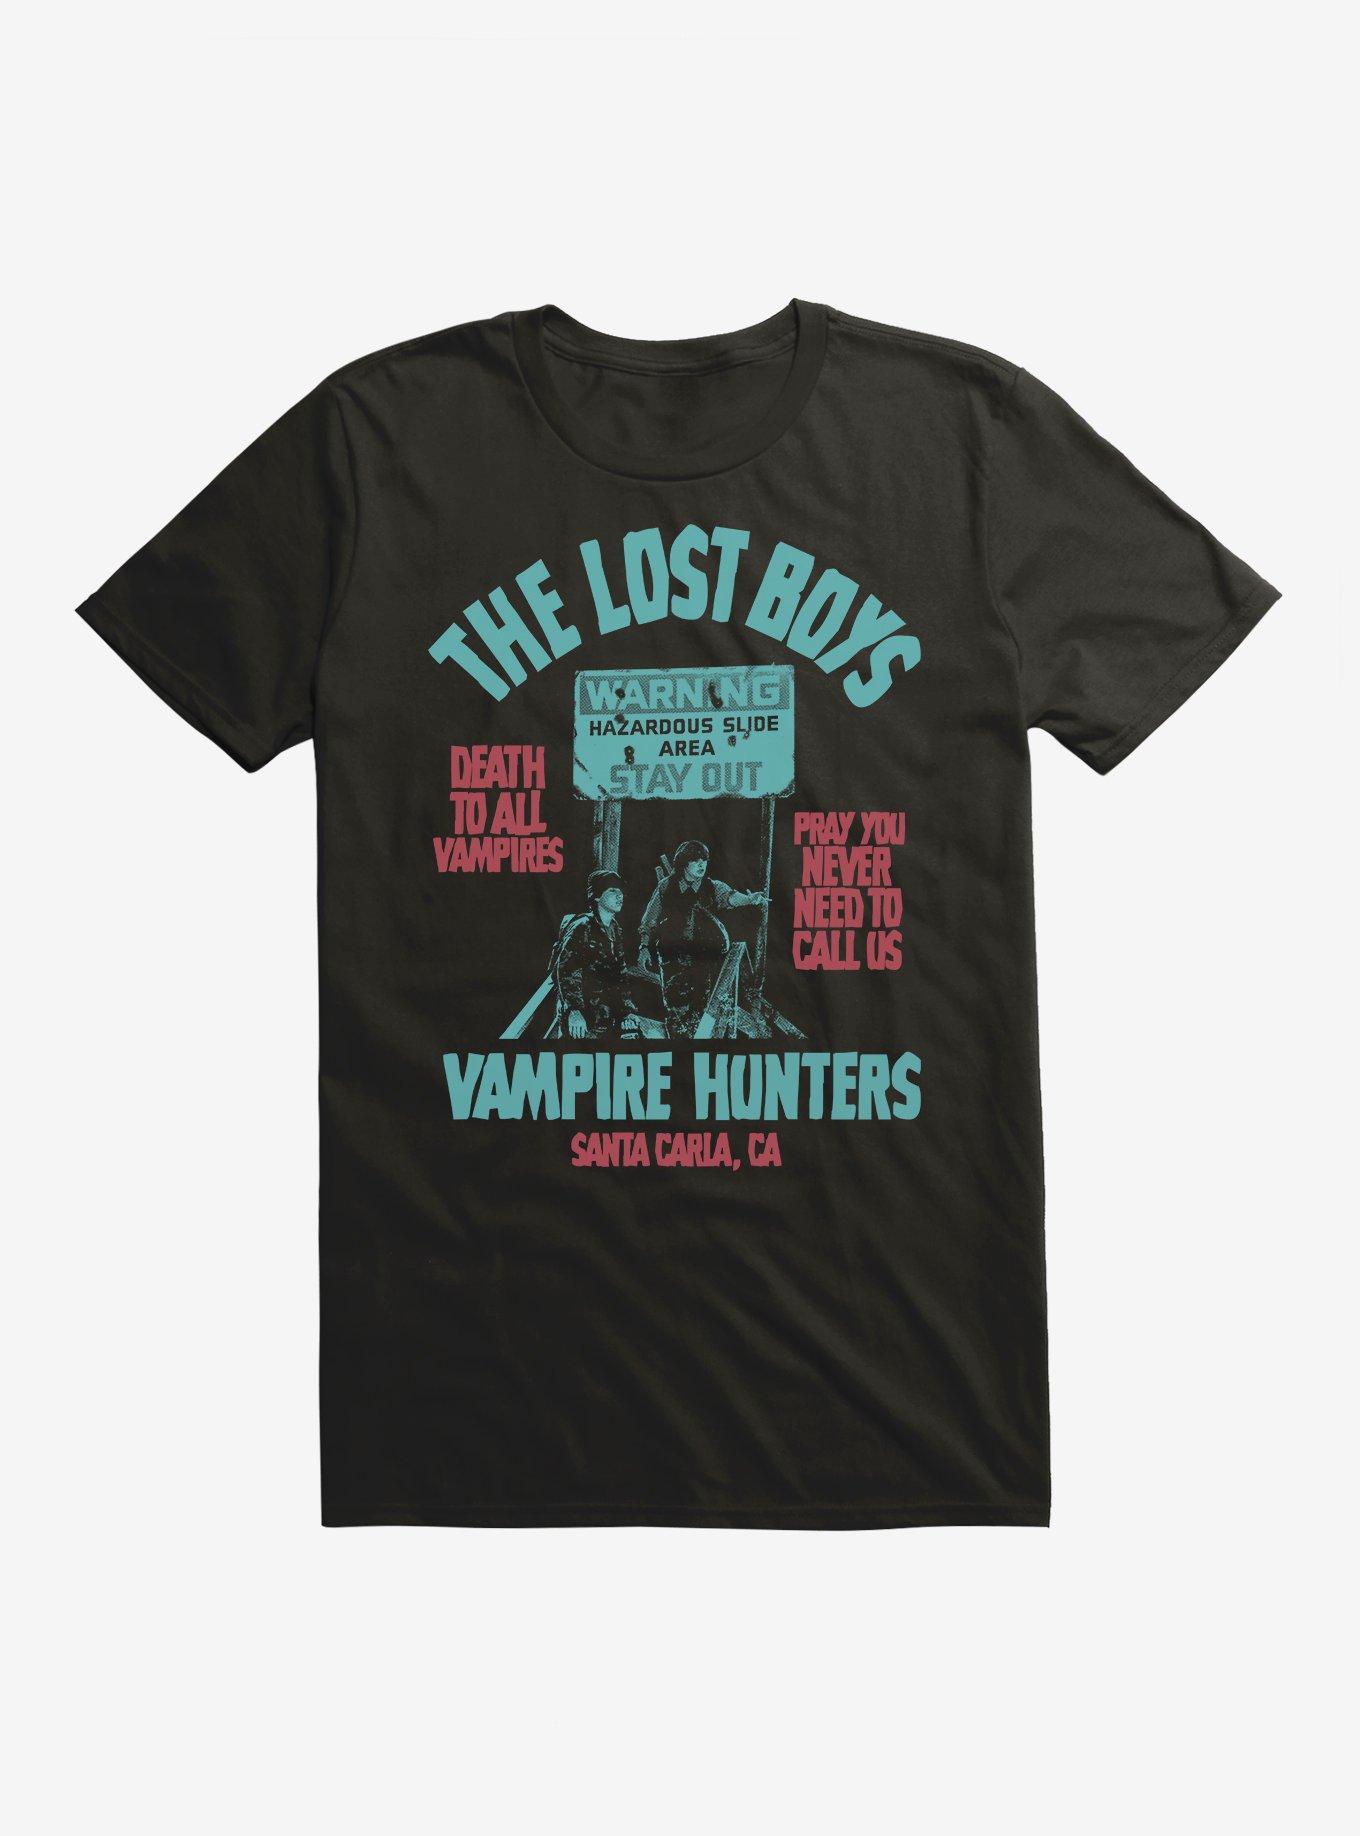 The Lost Boys Vampire Hunters T-Shirt